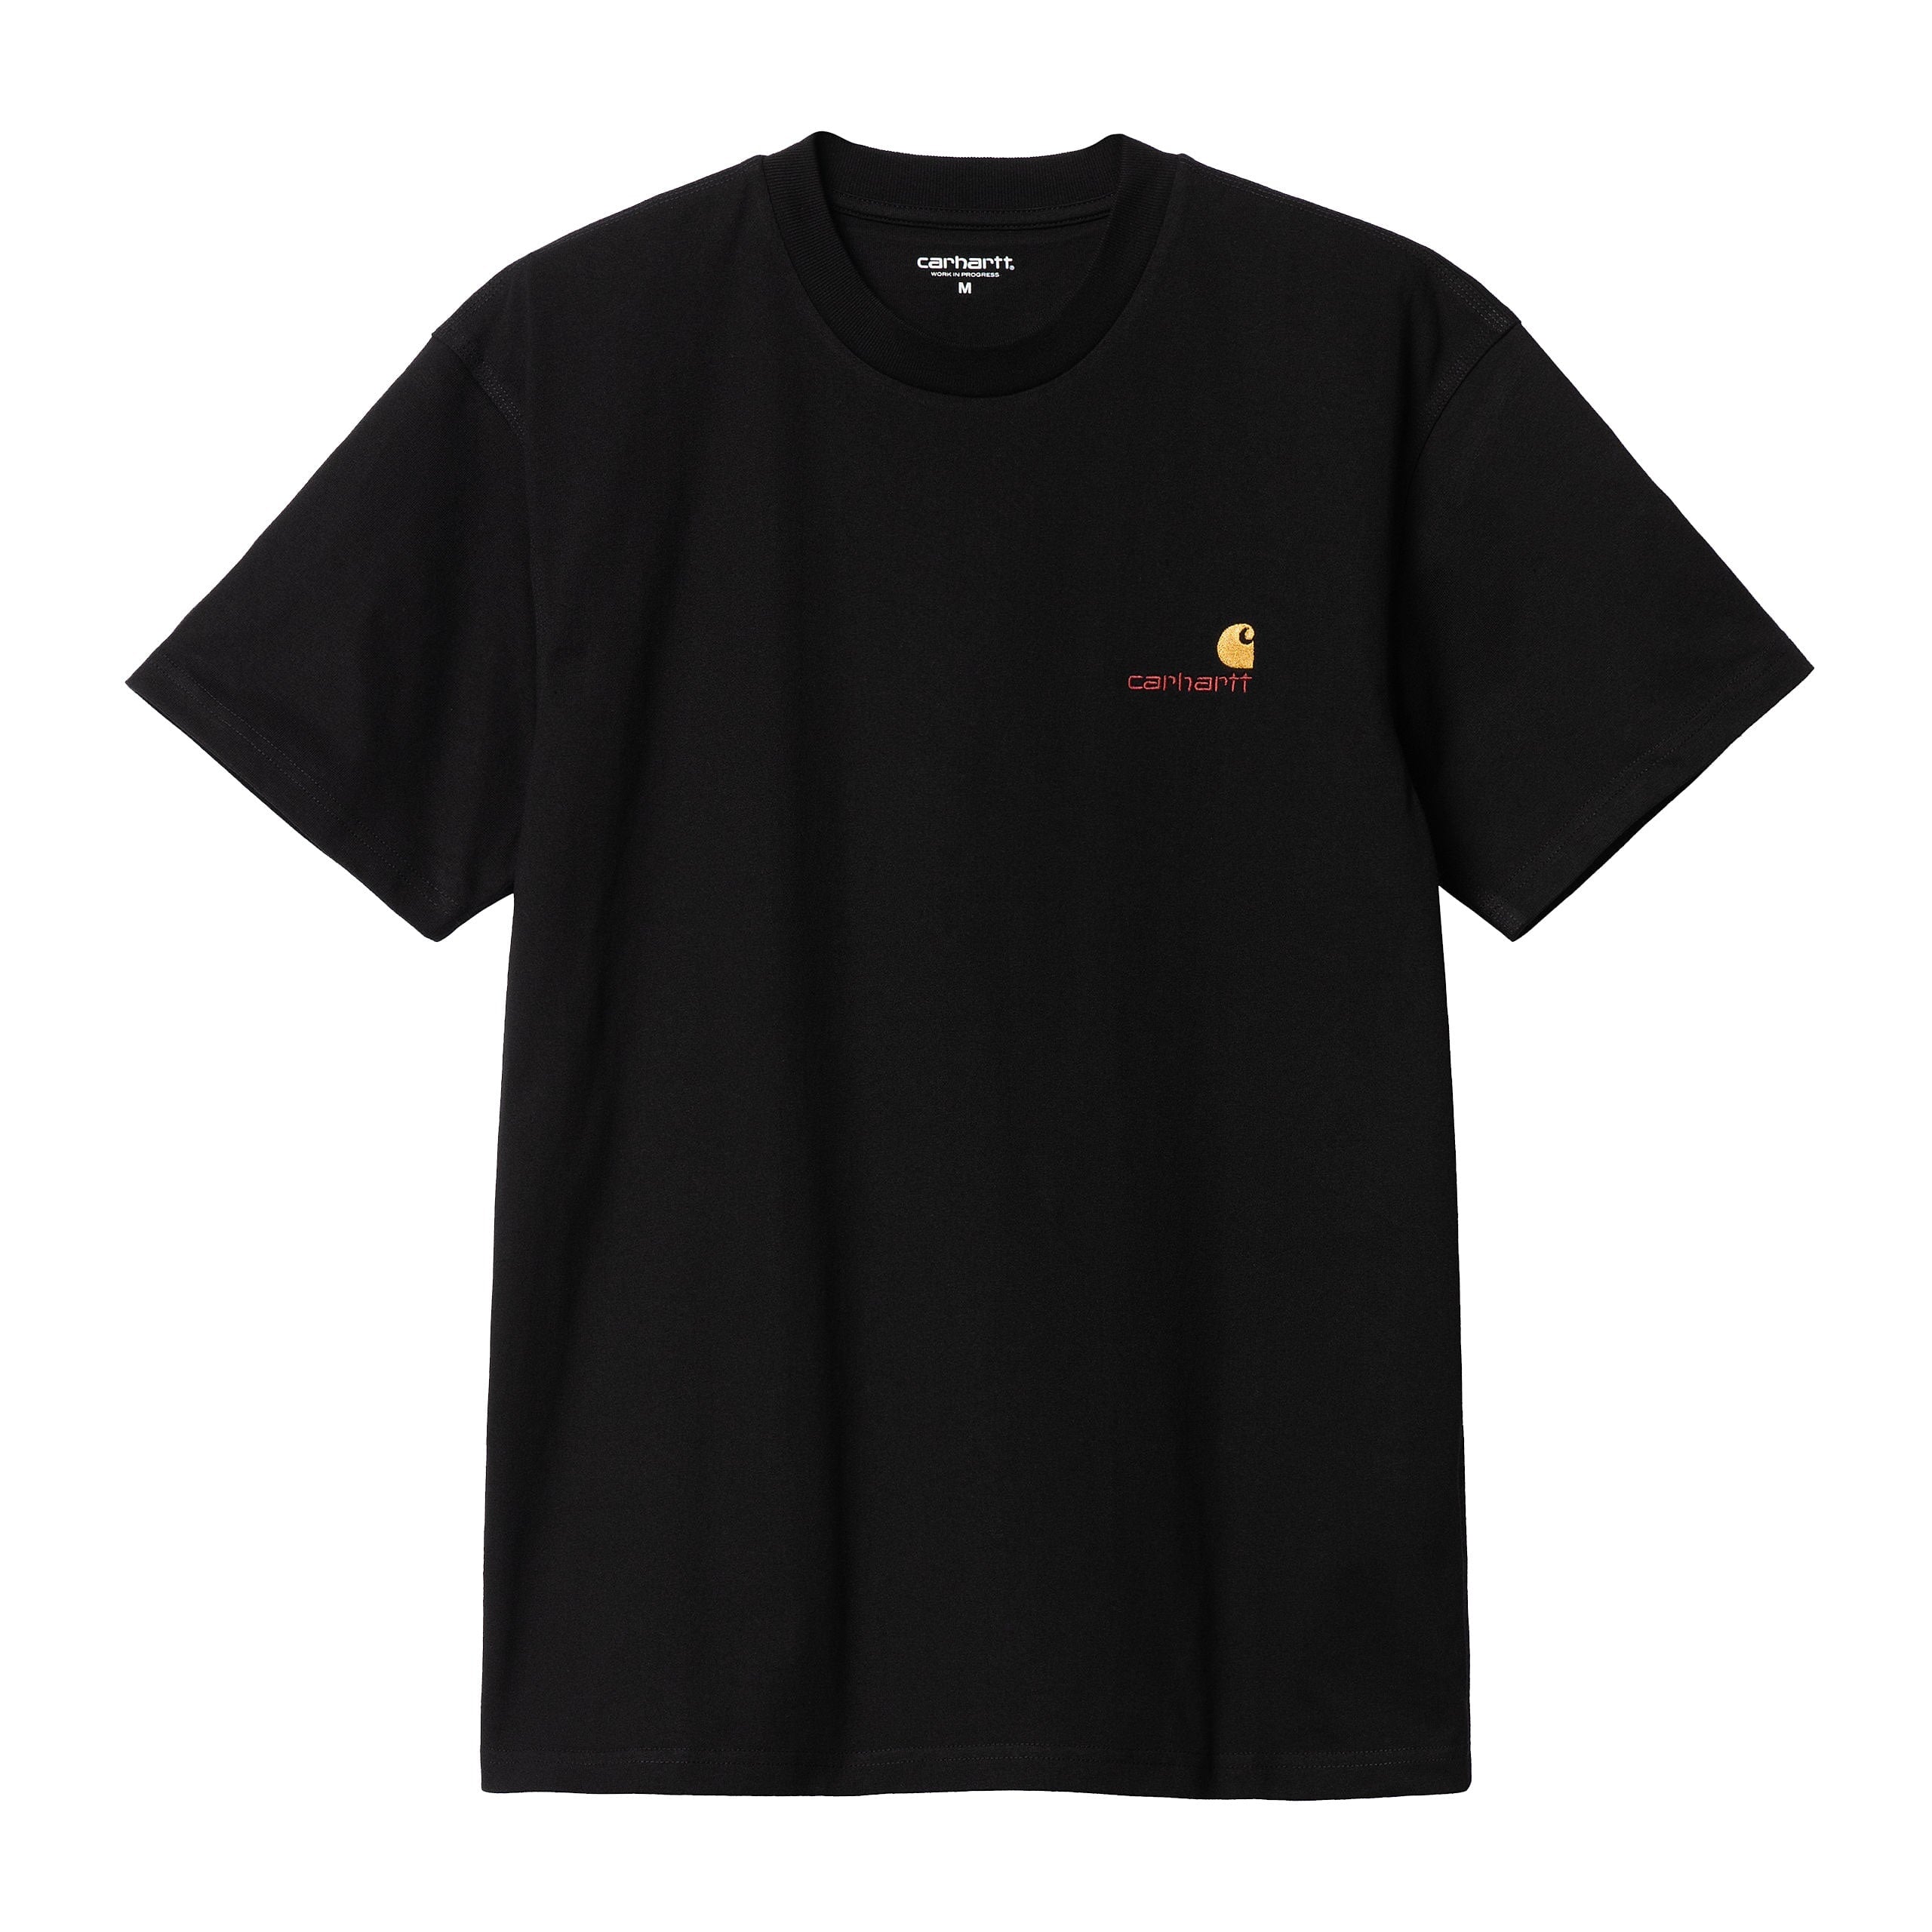 Carhartt WIP S-S American Script T-Shirt - Black T-Shirt Carhartt WIP 